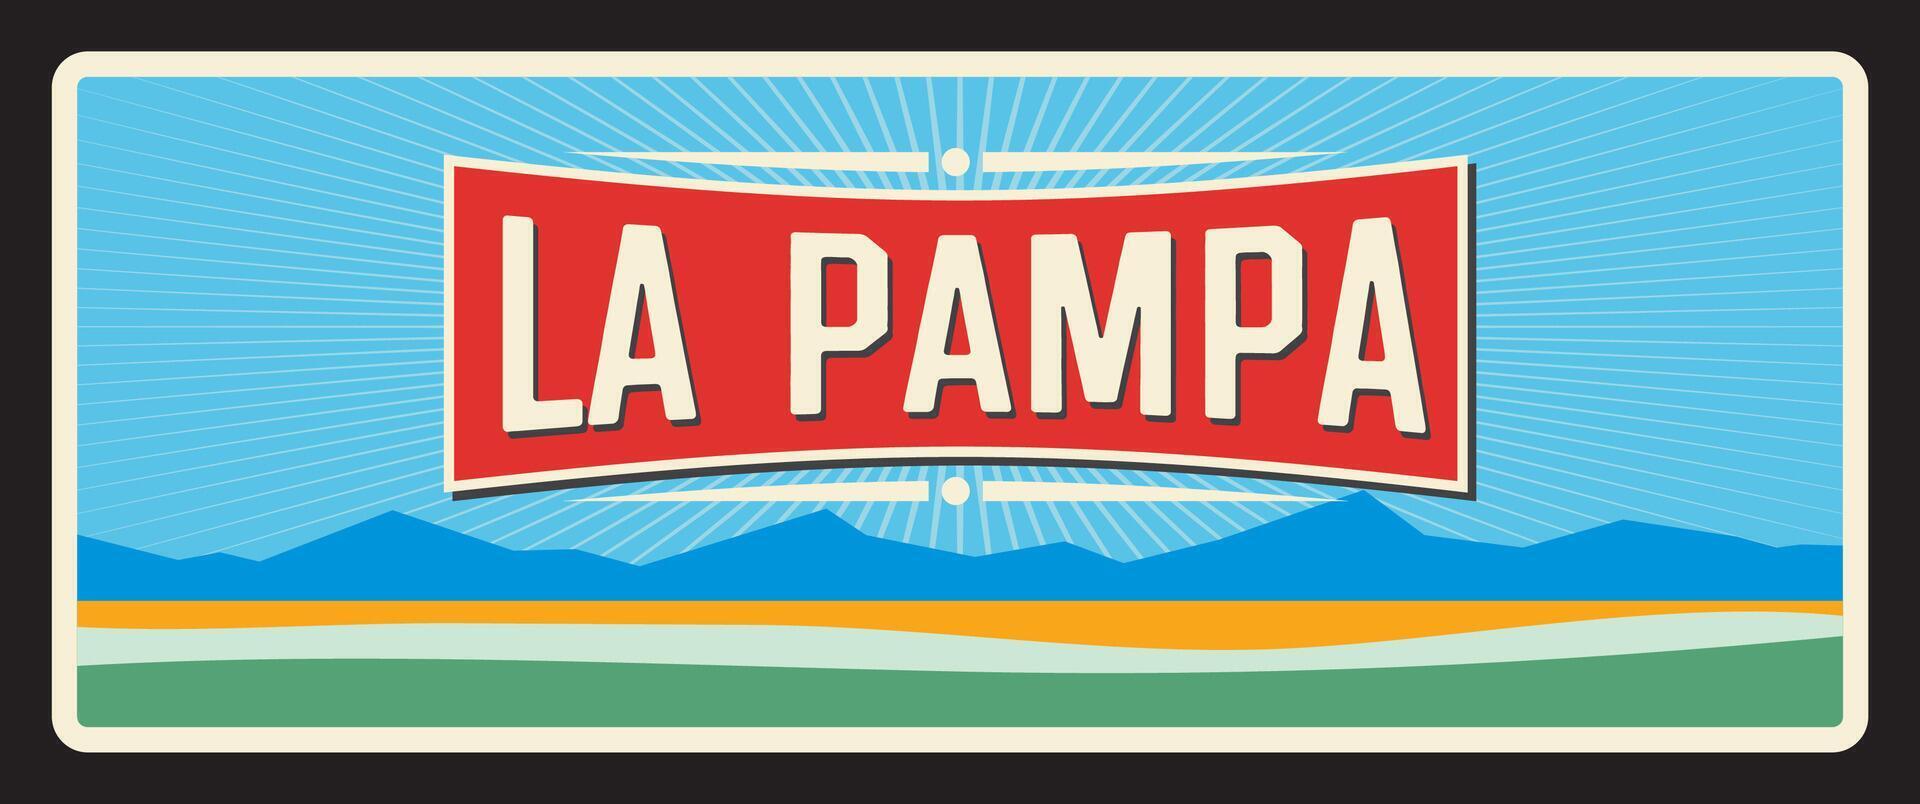 La Pampa Argentine province vintage travel plate vector